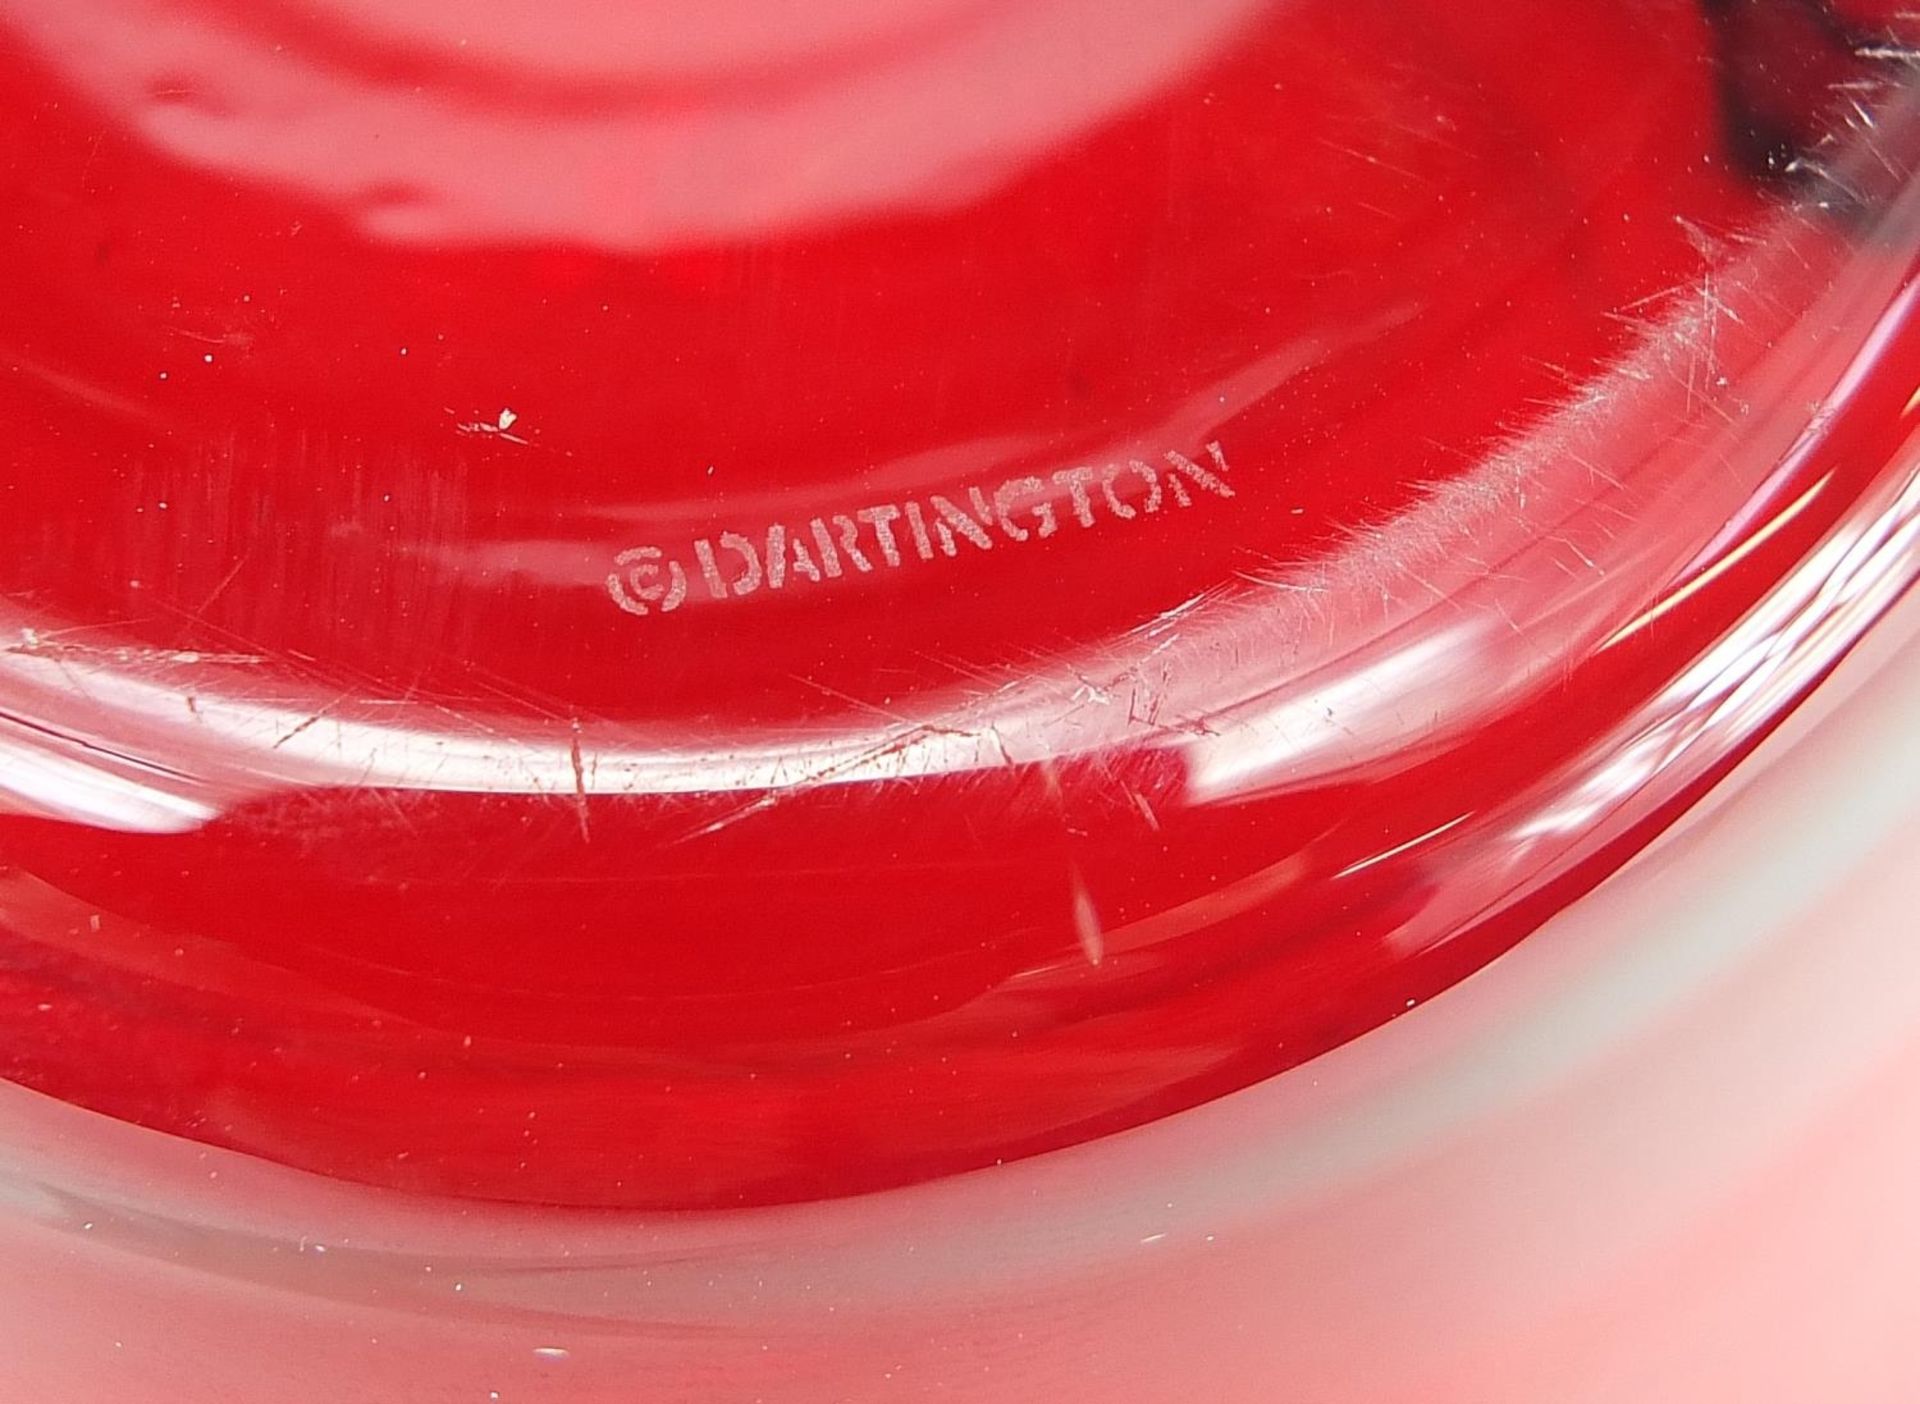 Dartington Crystal ruby glass bowl, 17cm high x 23.5cm in diameter - Image 4 of 4